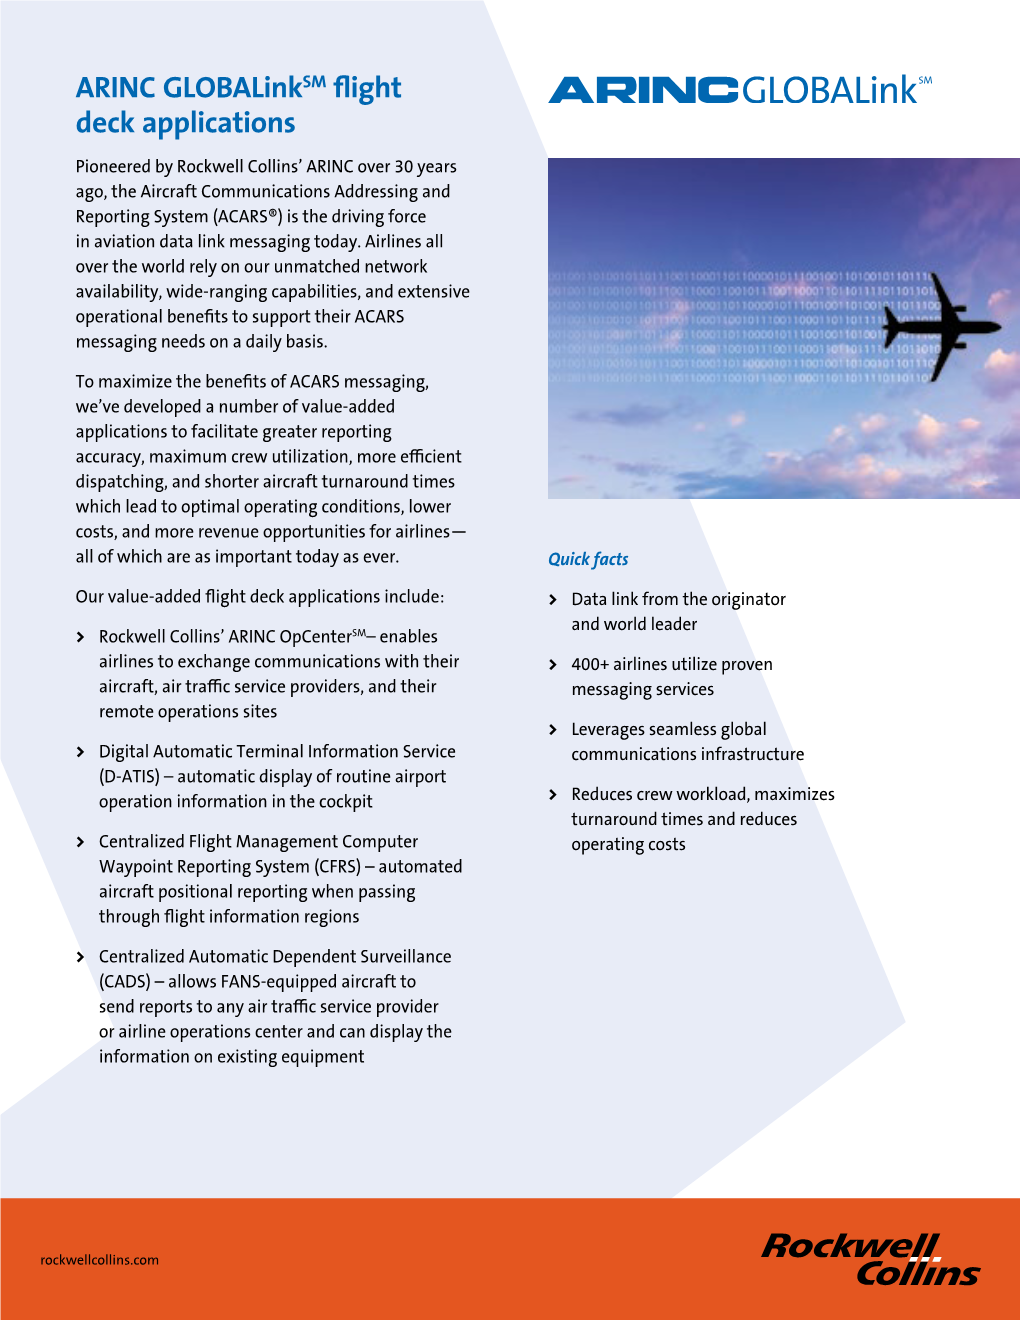 ARINC Globalinksm Flight Deck Applications